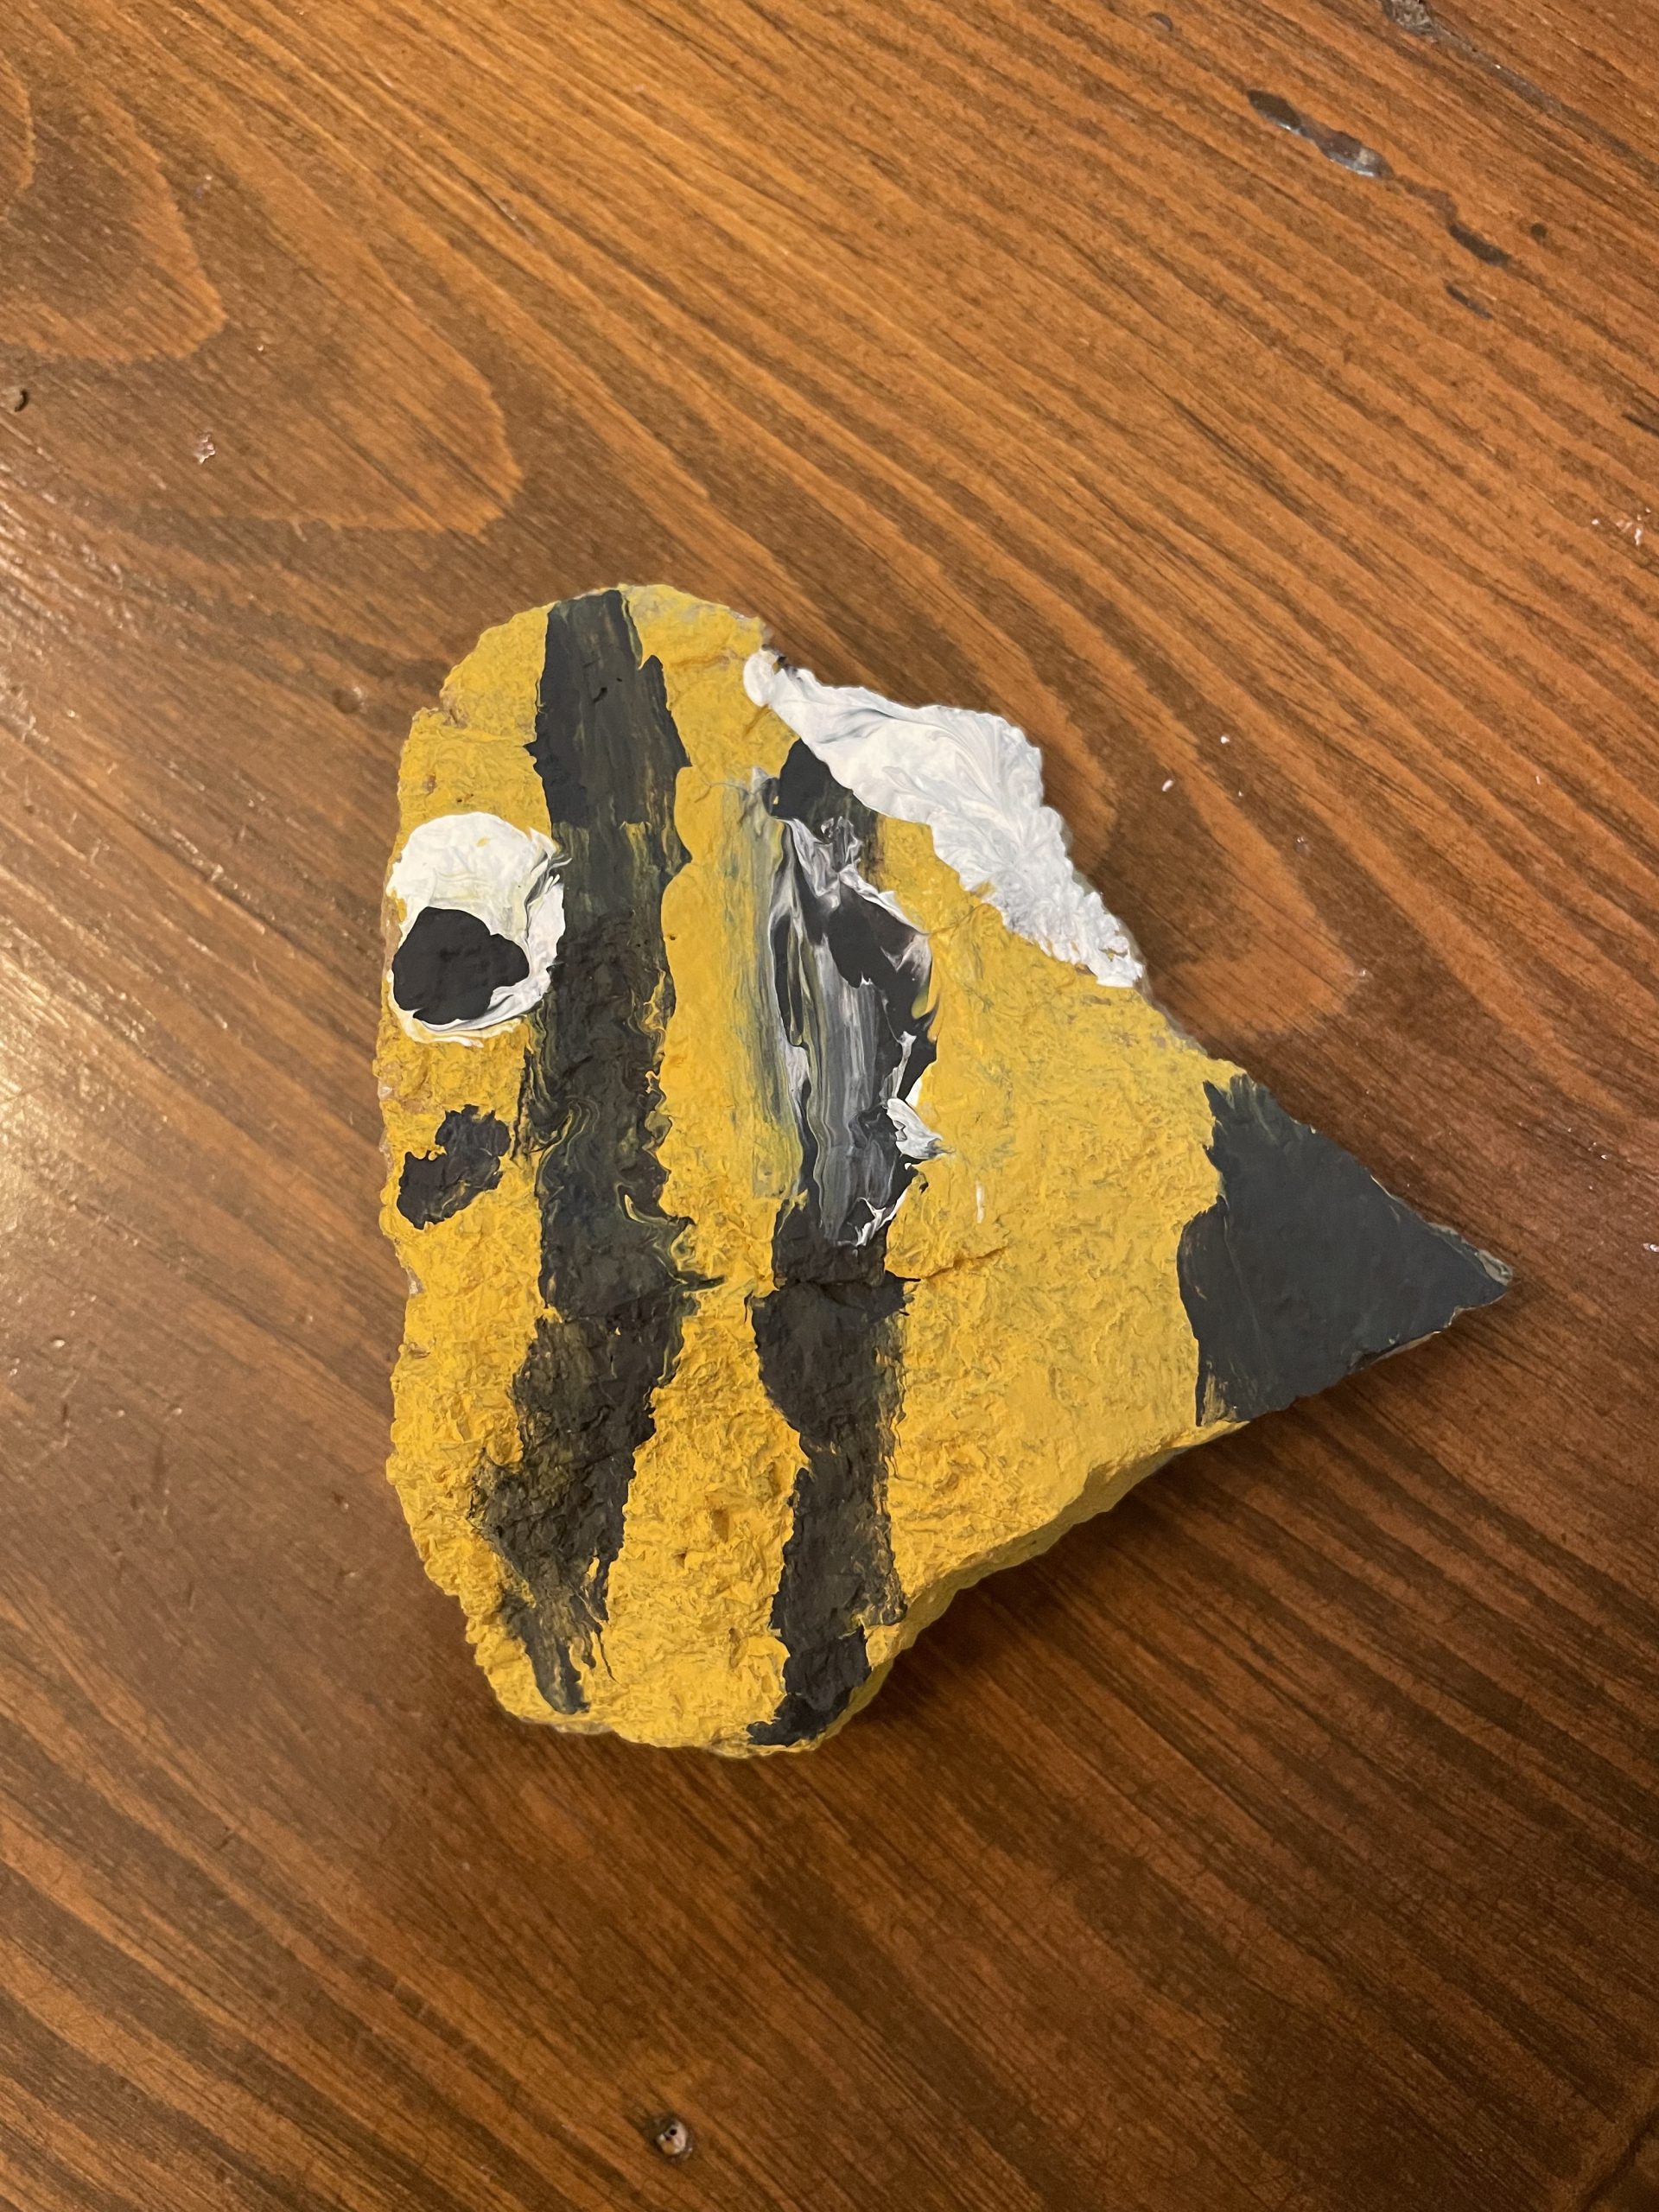 A rock painted like a bee